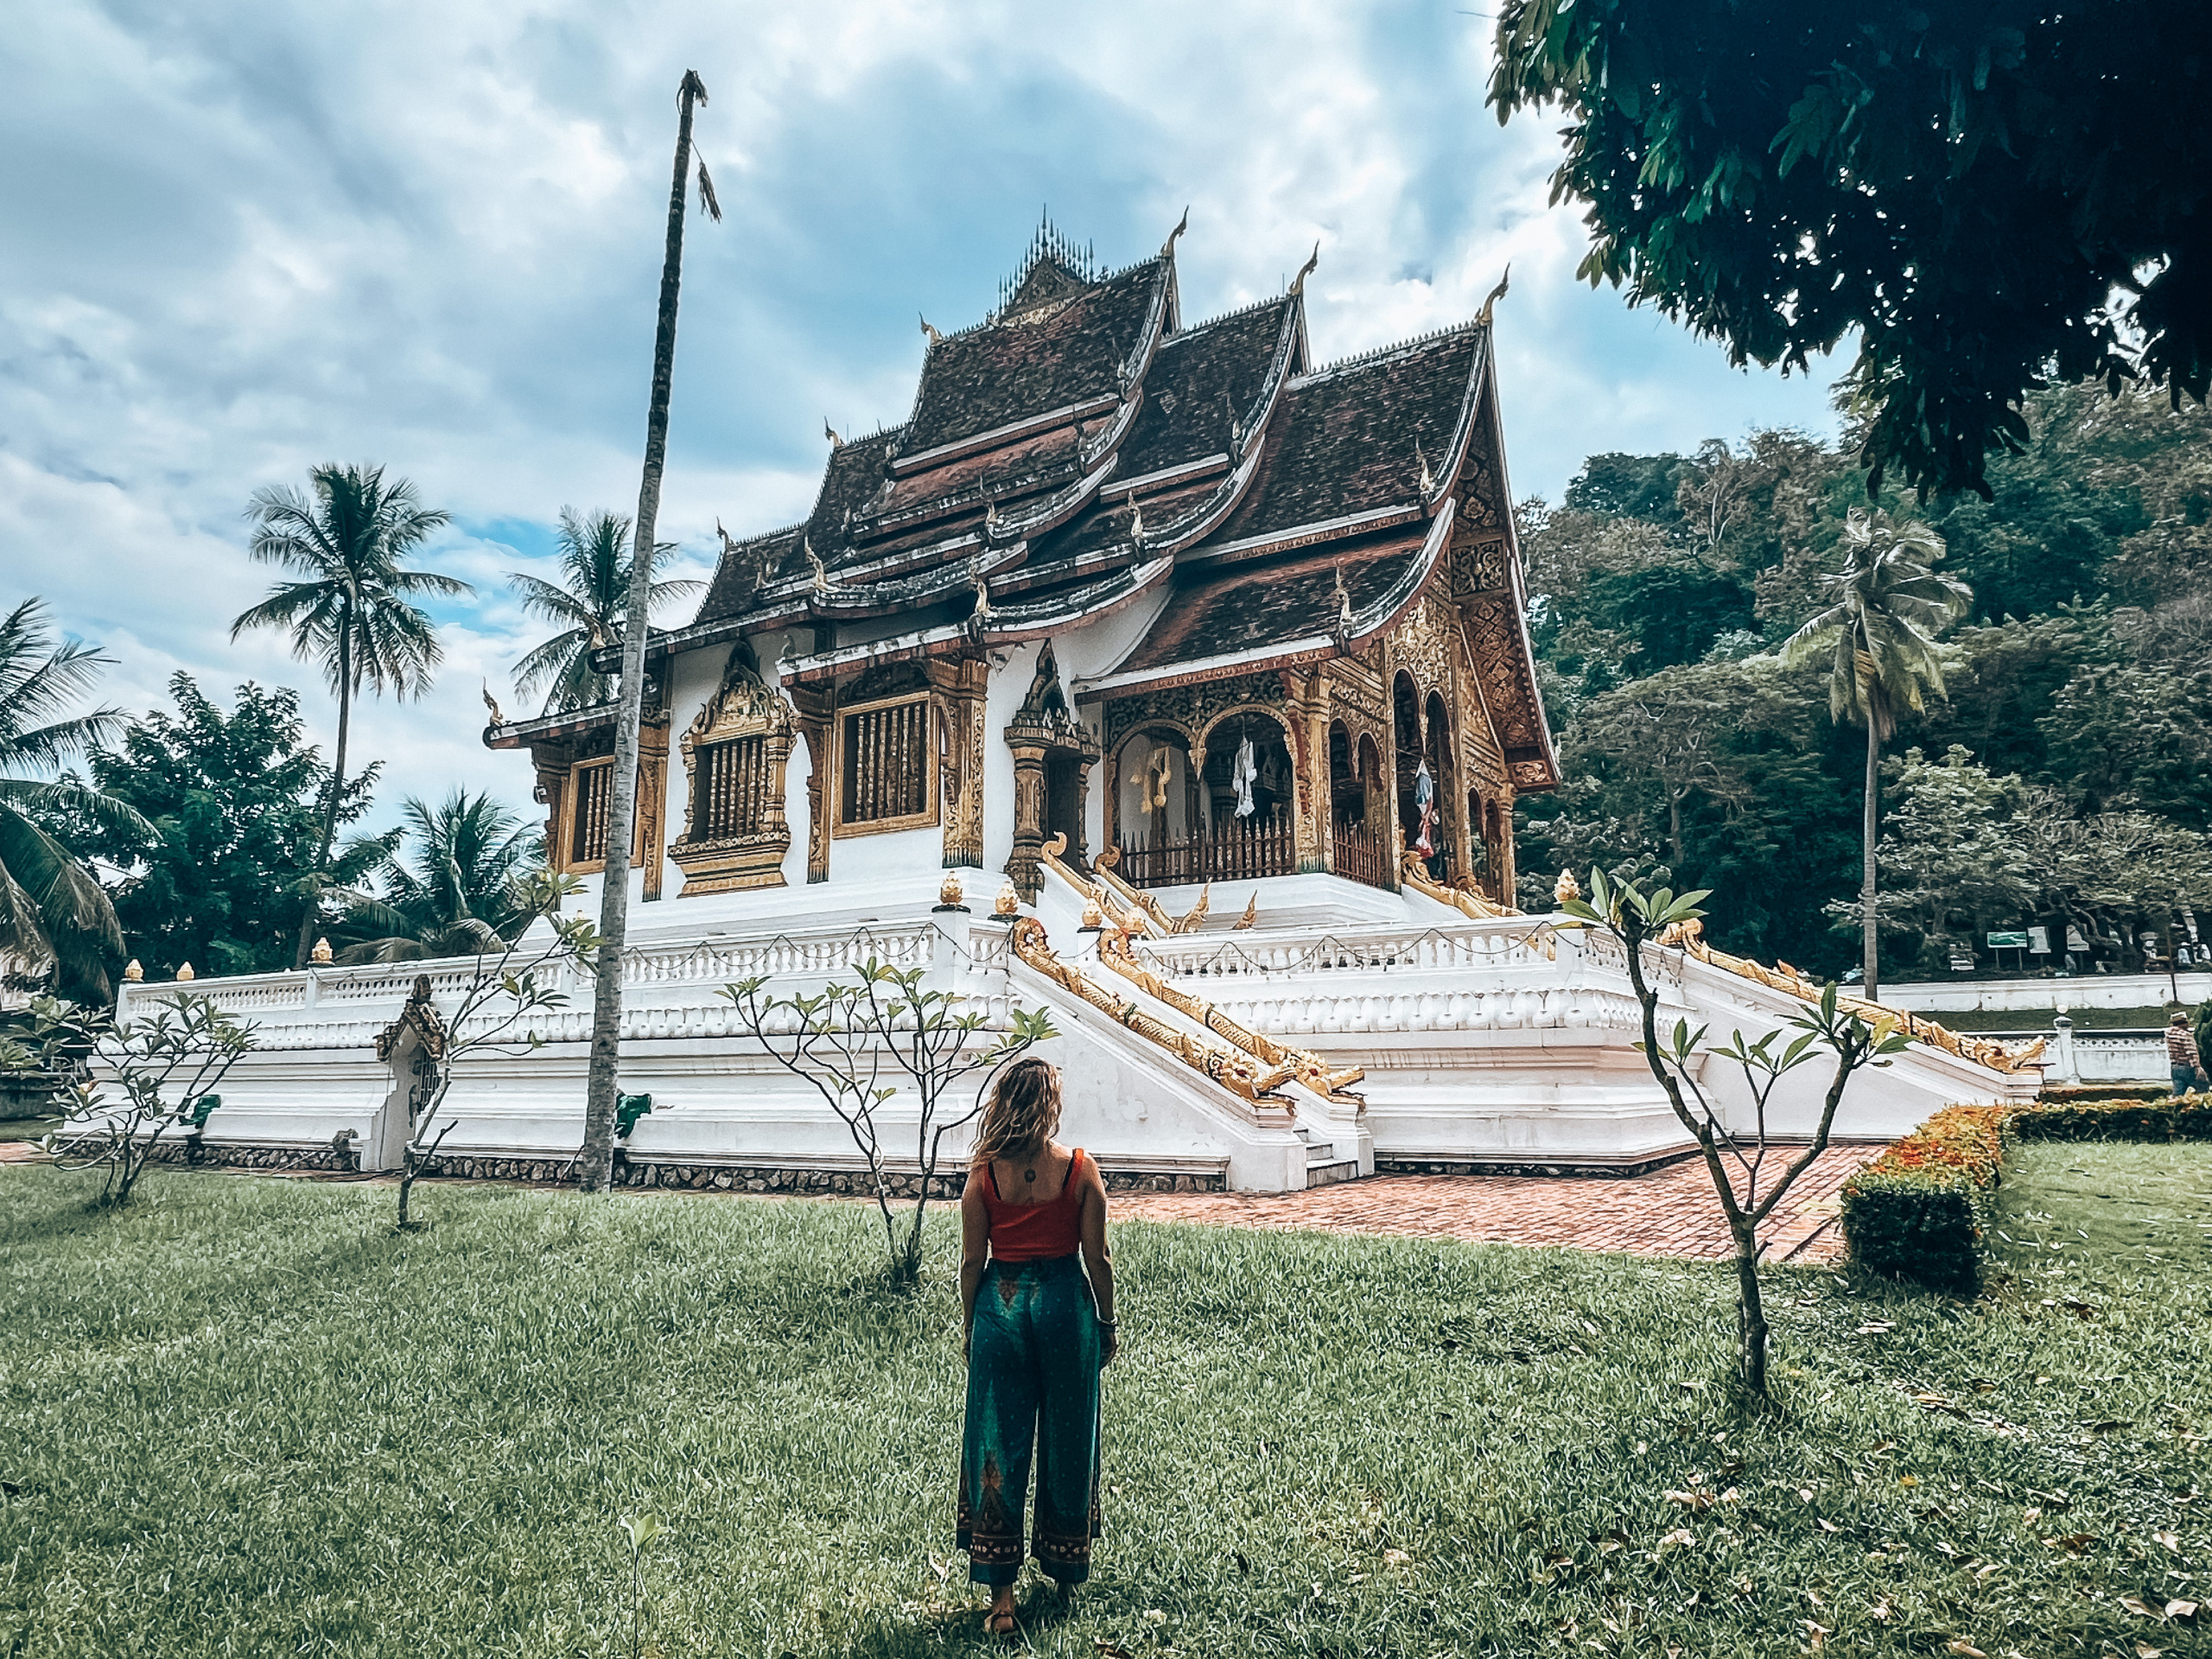 Wat te doen in Laos? Tempel in het oude koninklijk paleis